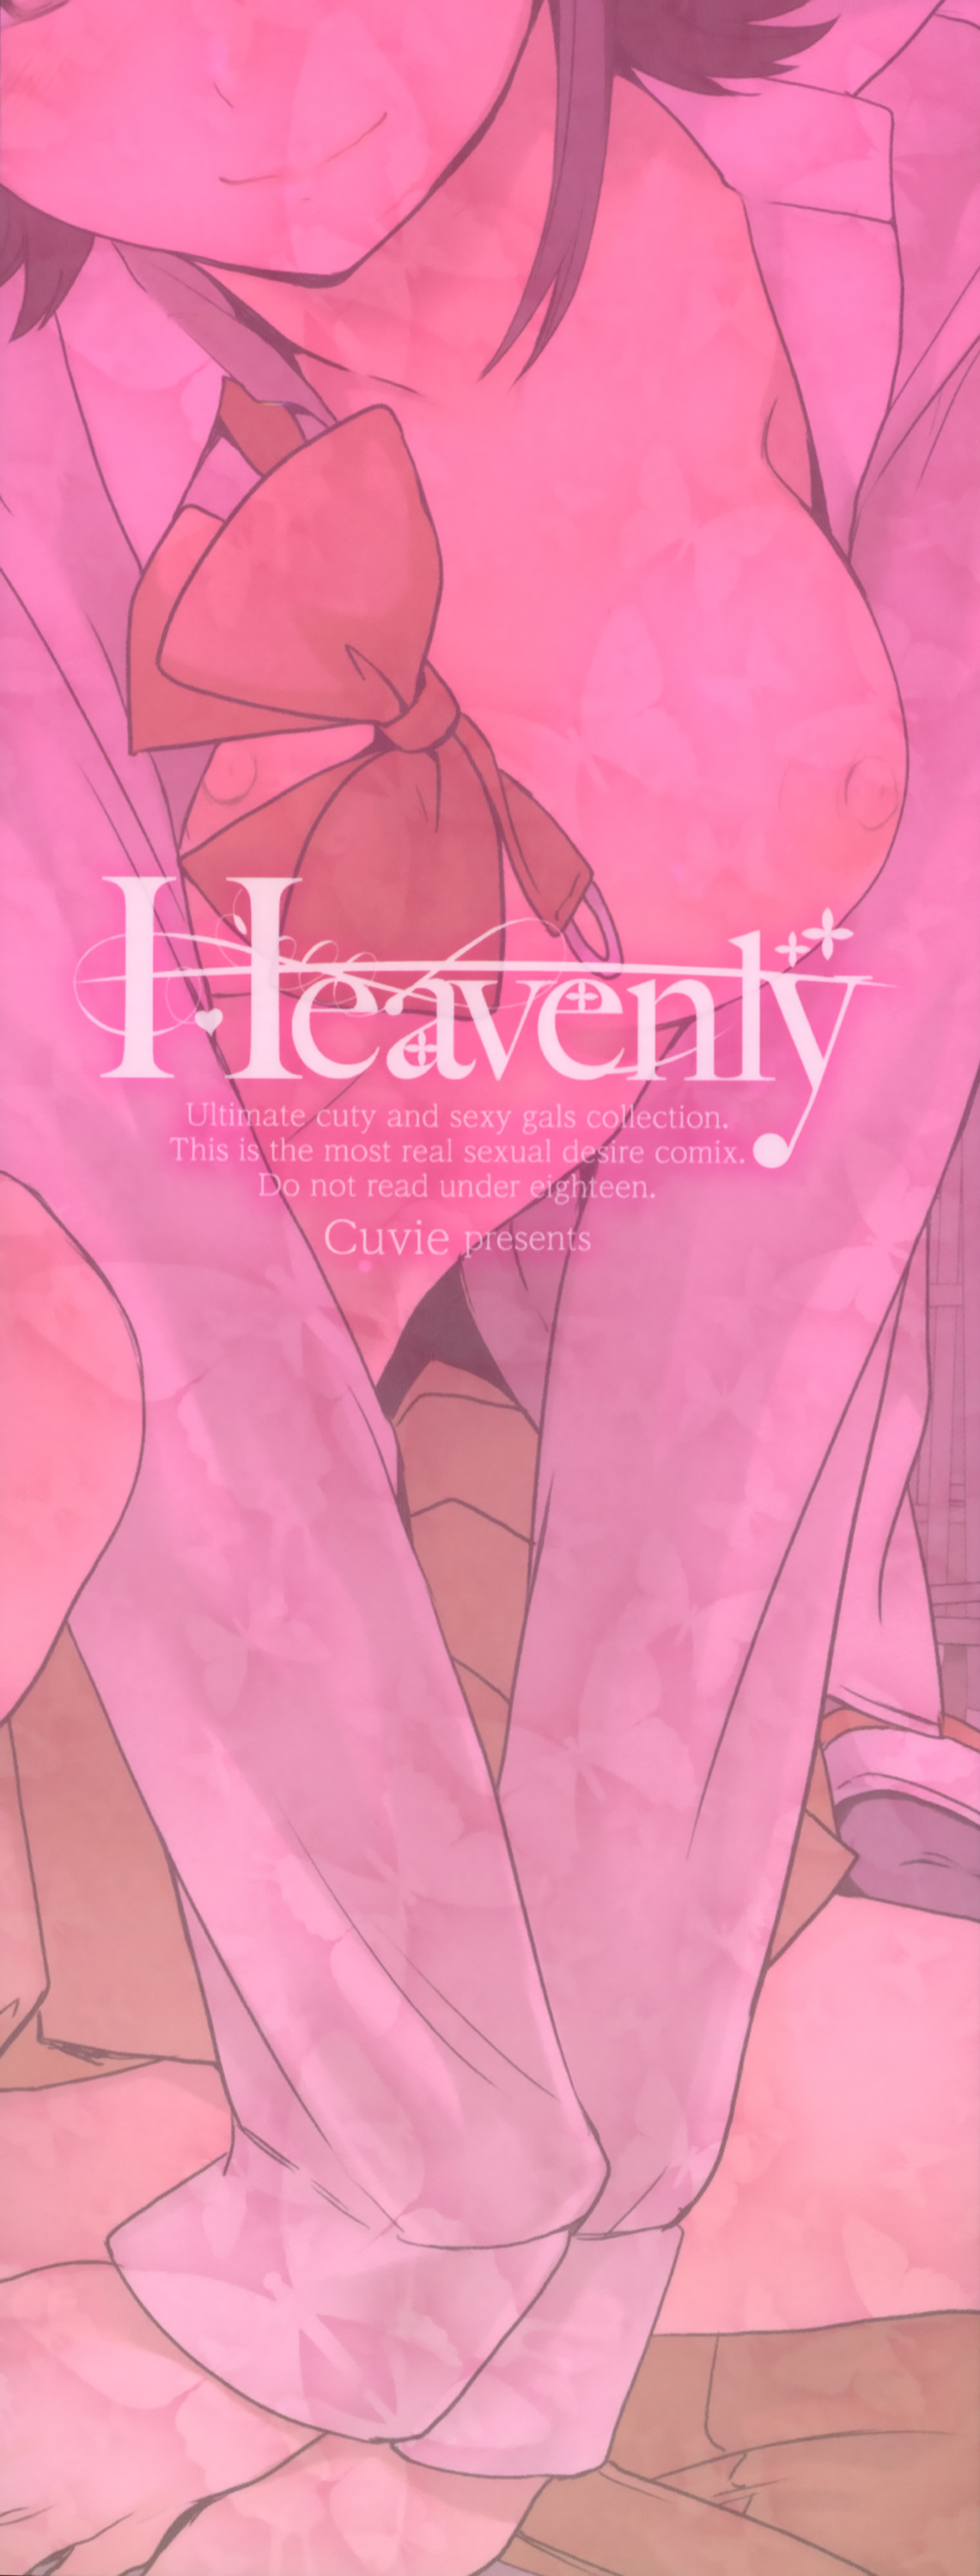 [Cuvie] Heavenly